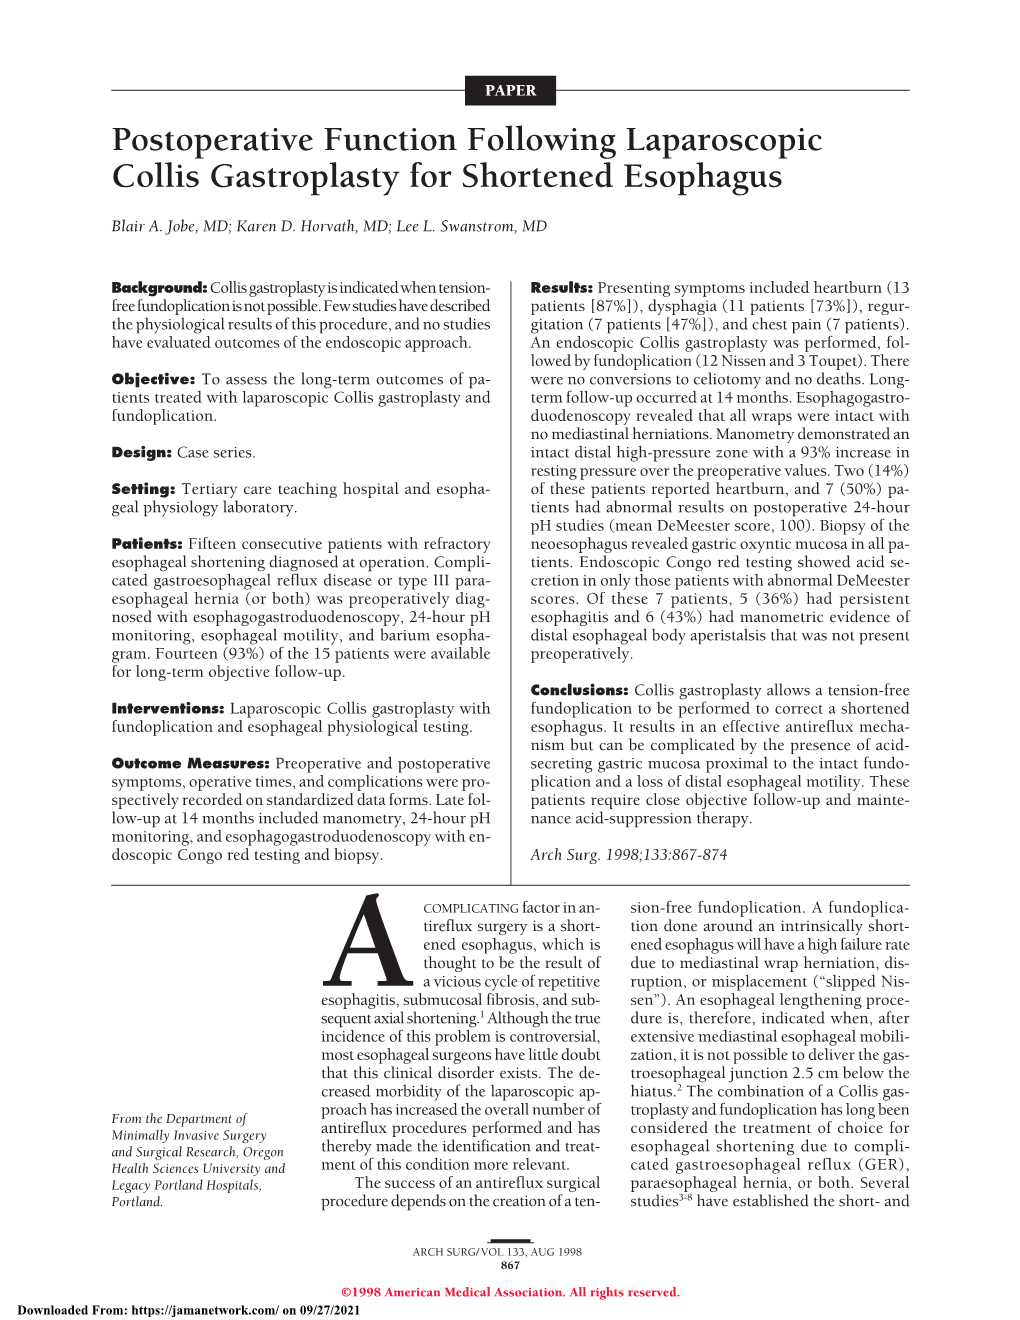 Postoperative Function Following Laparoscopic Collis Gastroplasty for Shortened Esophagus